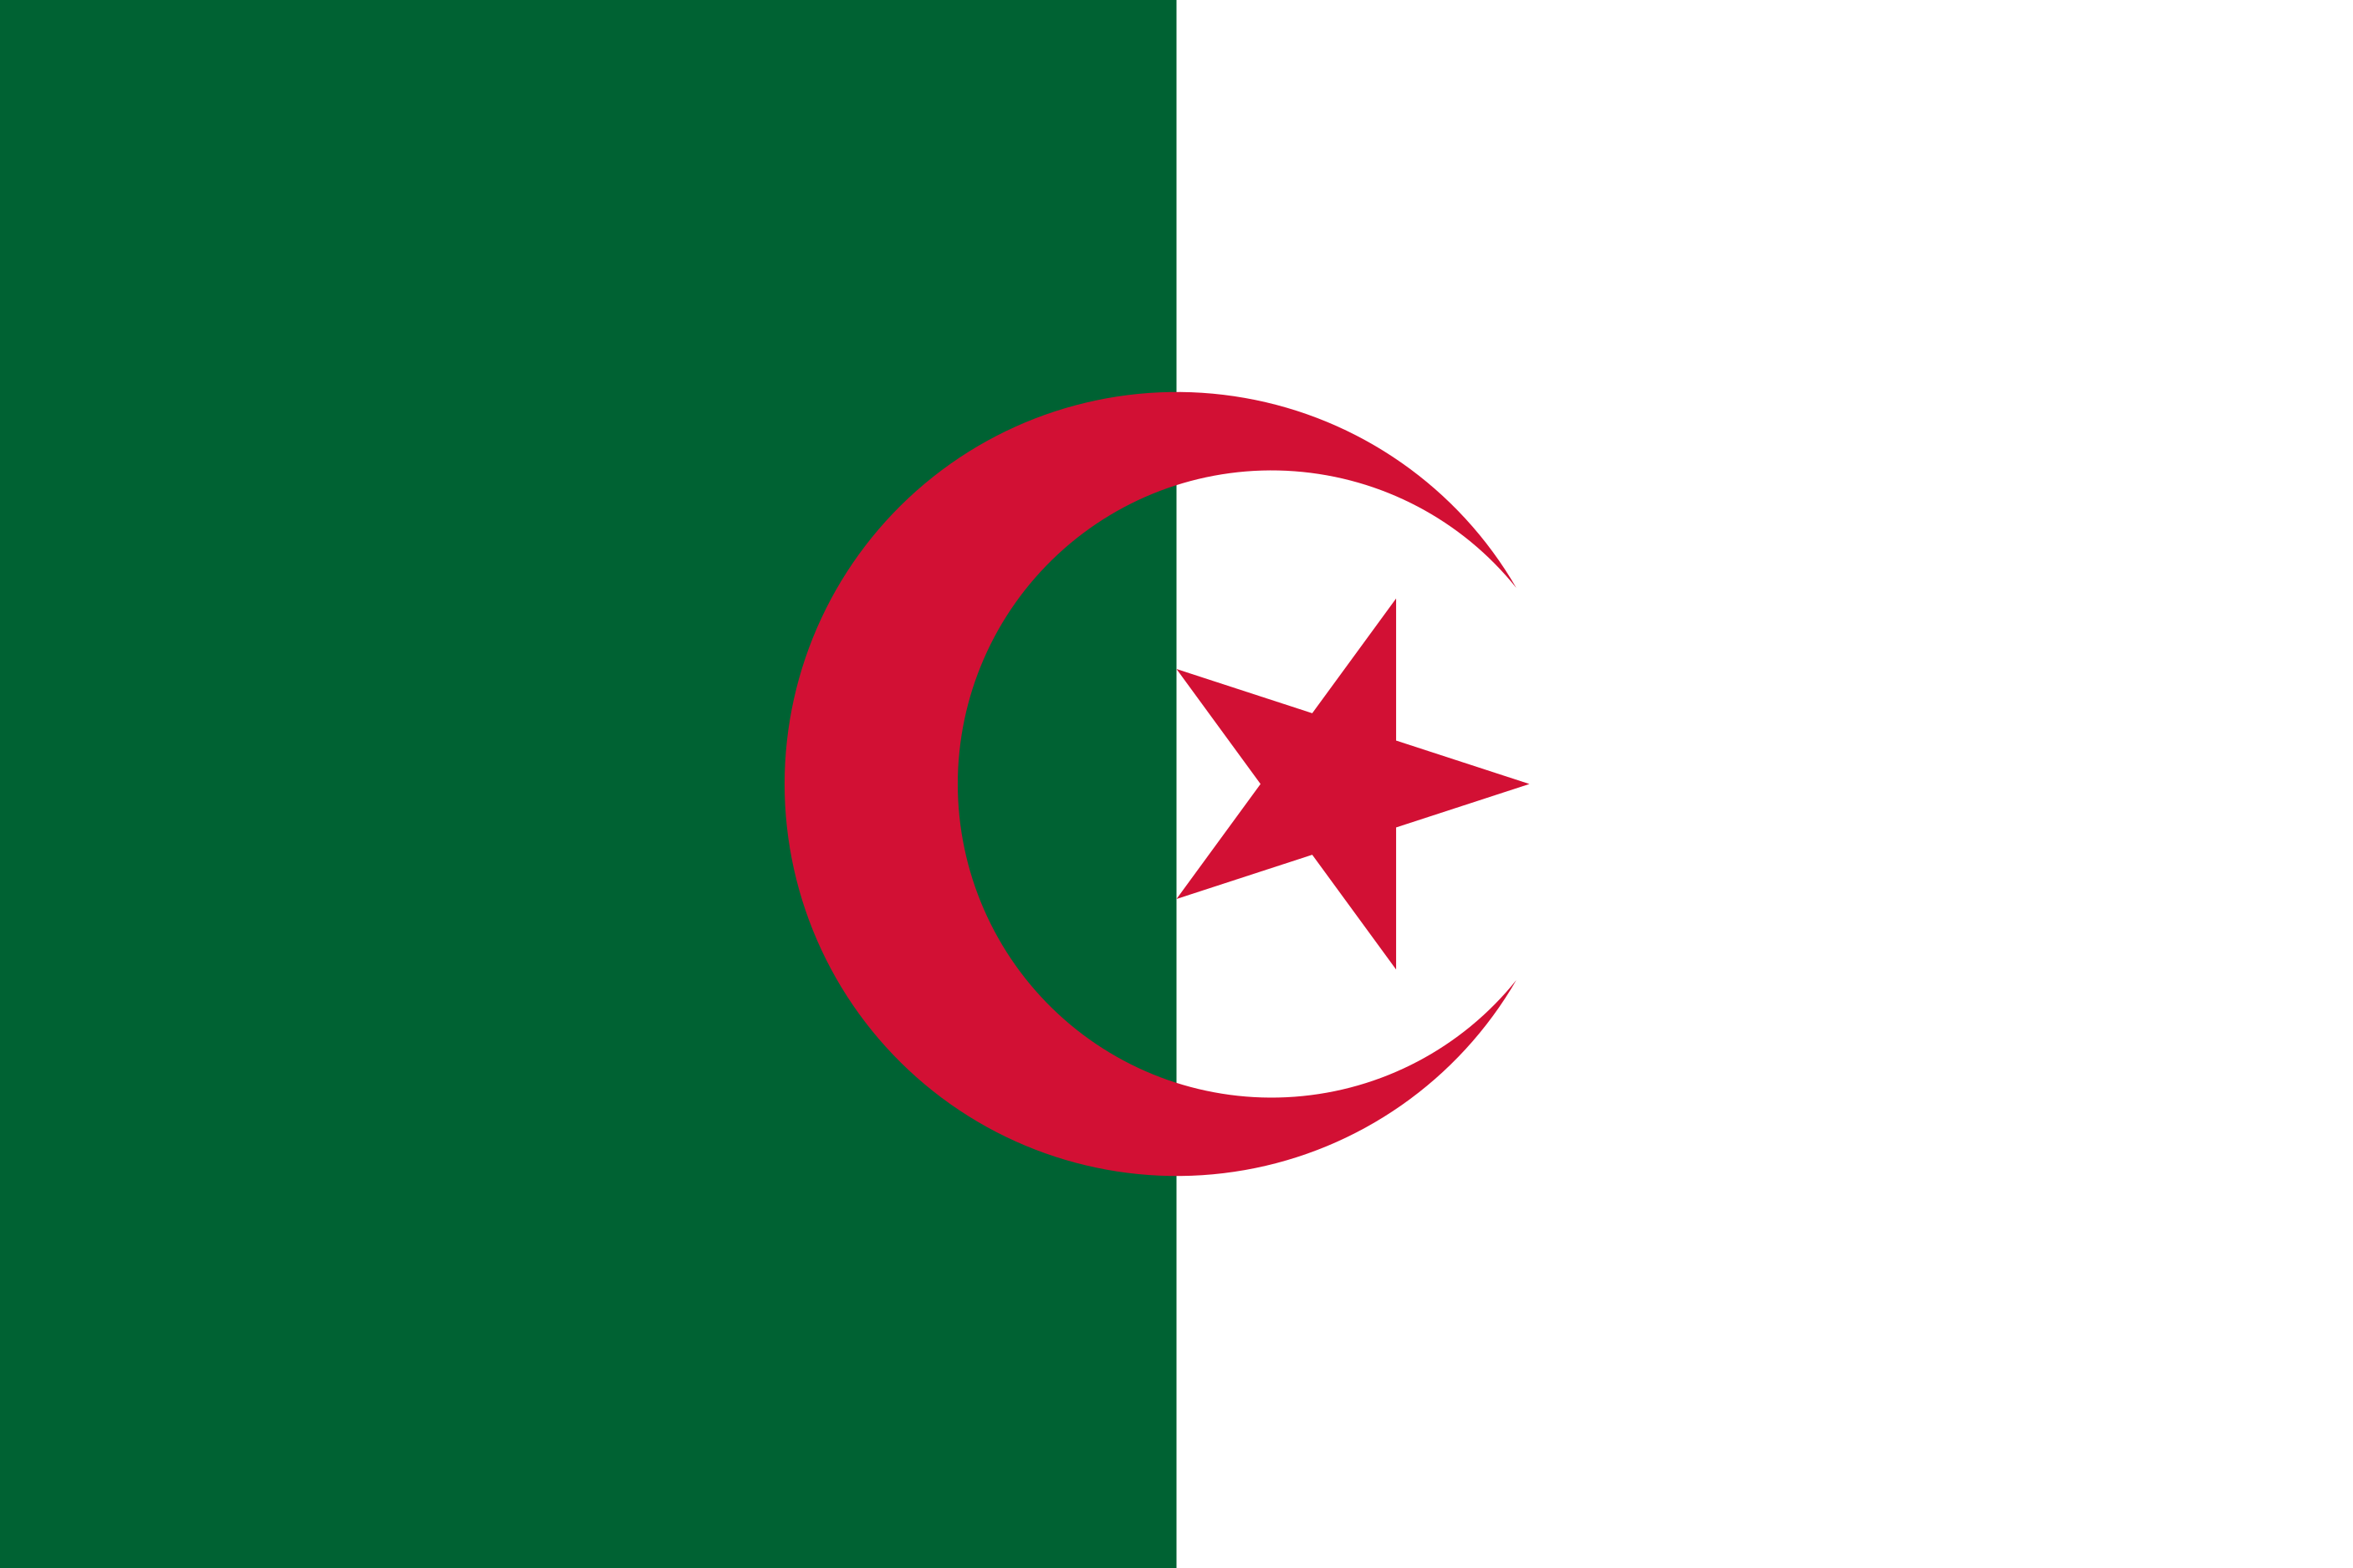 Free Algeria Flag Documents: PDF, DOC, DOCX, HTML & More!